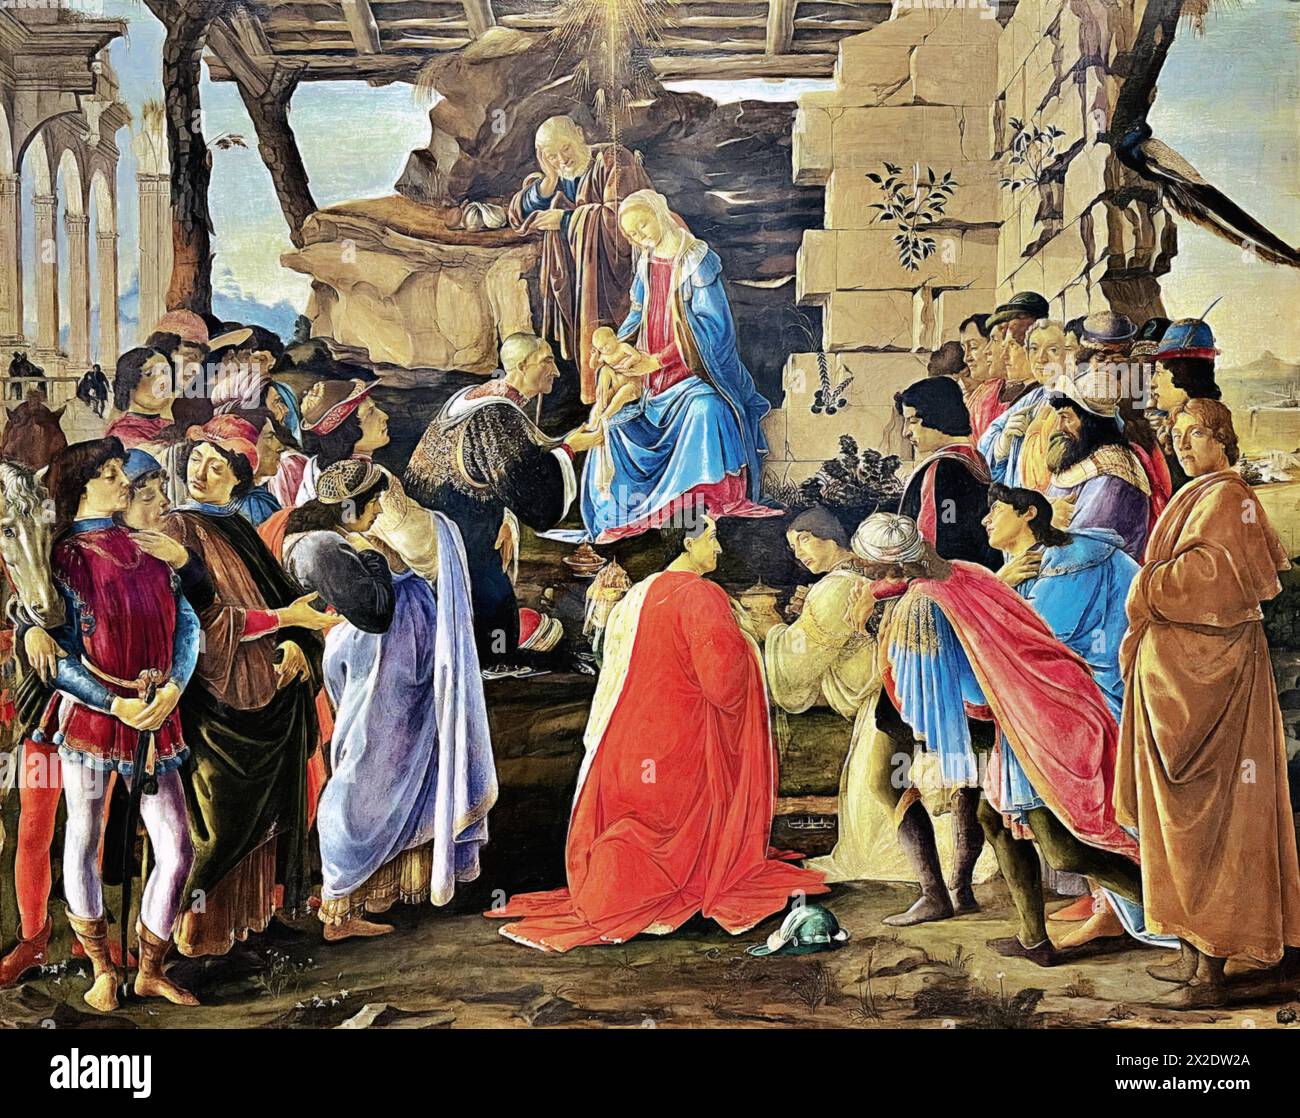 Anbetung der Könige, um 1475 (Gemälde) von Botticelli, Sandro (Alessandro di Mariano di Vanni Filipepi) (14445-1510) Italienisch. Stock Vektor